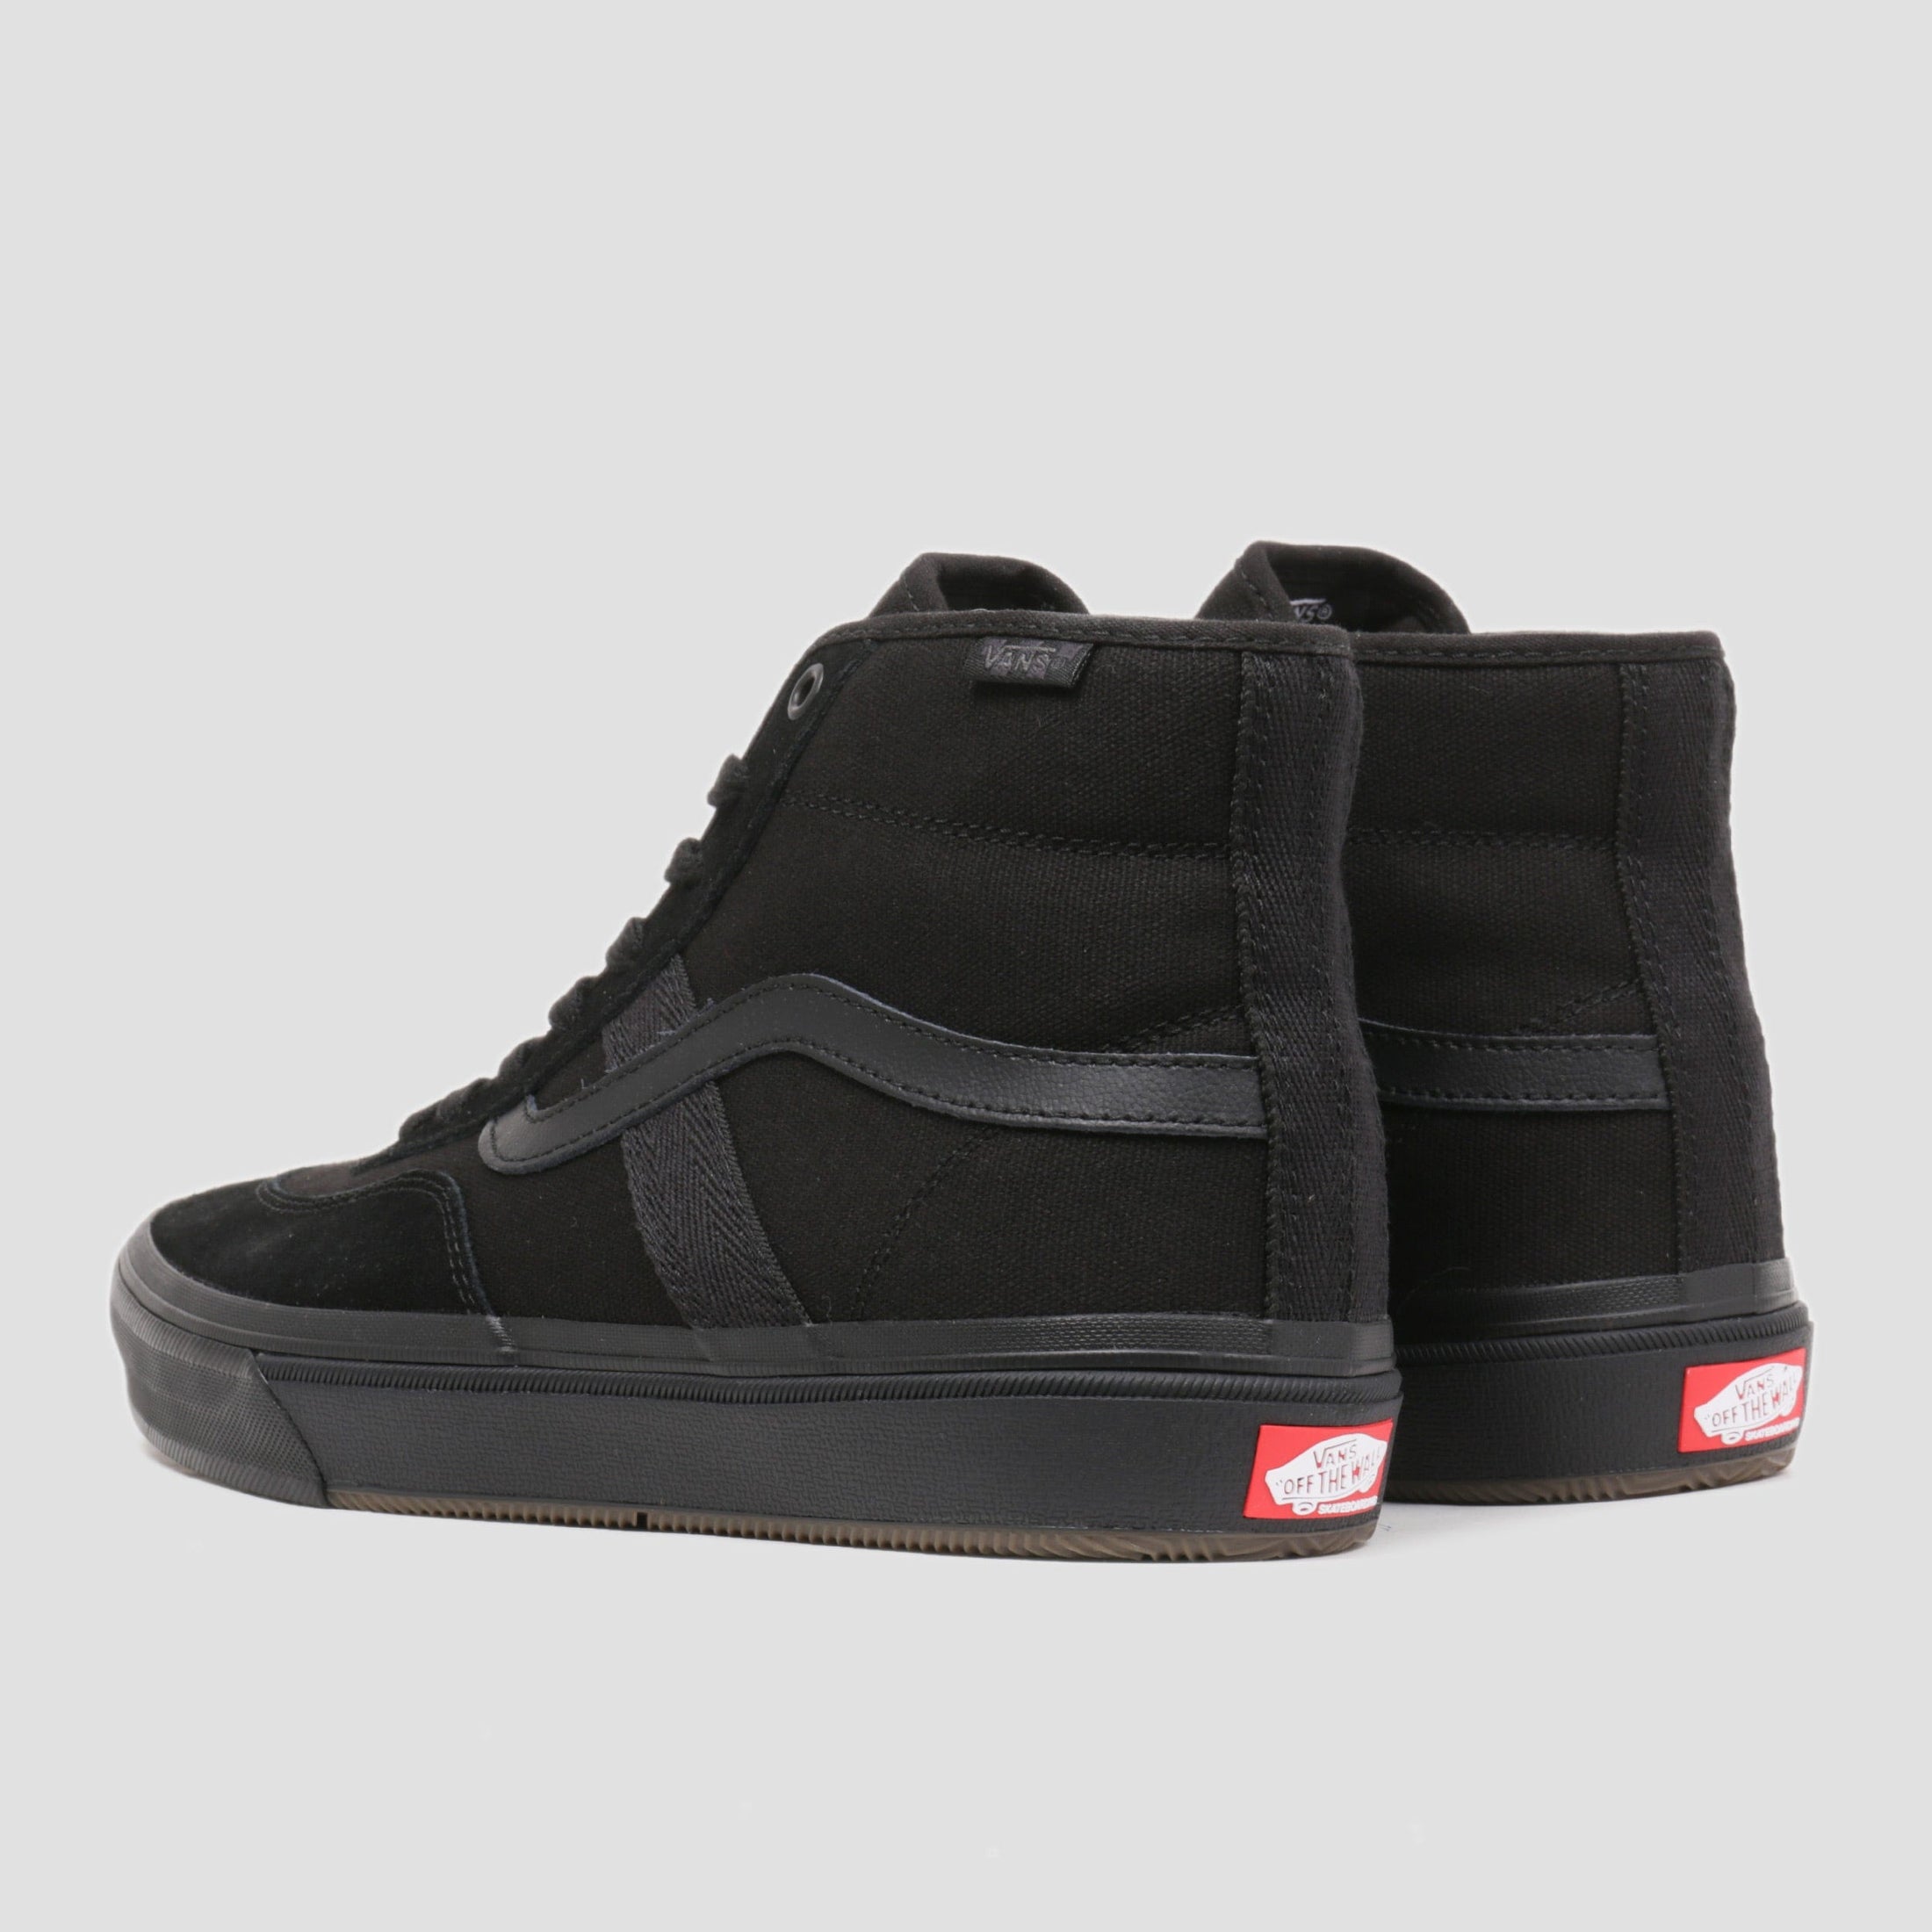 Vans Crockett High Skate Shoes Black